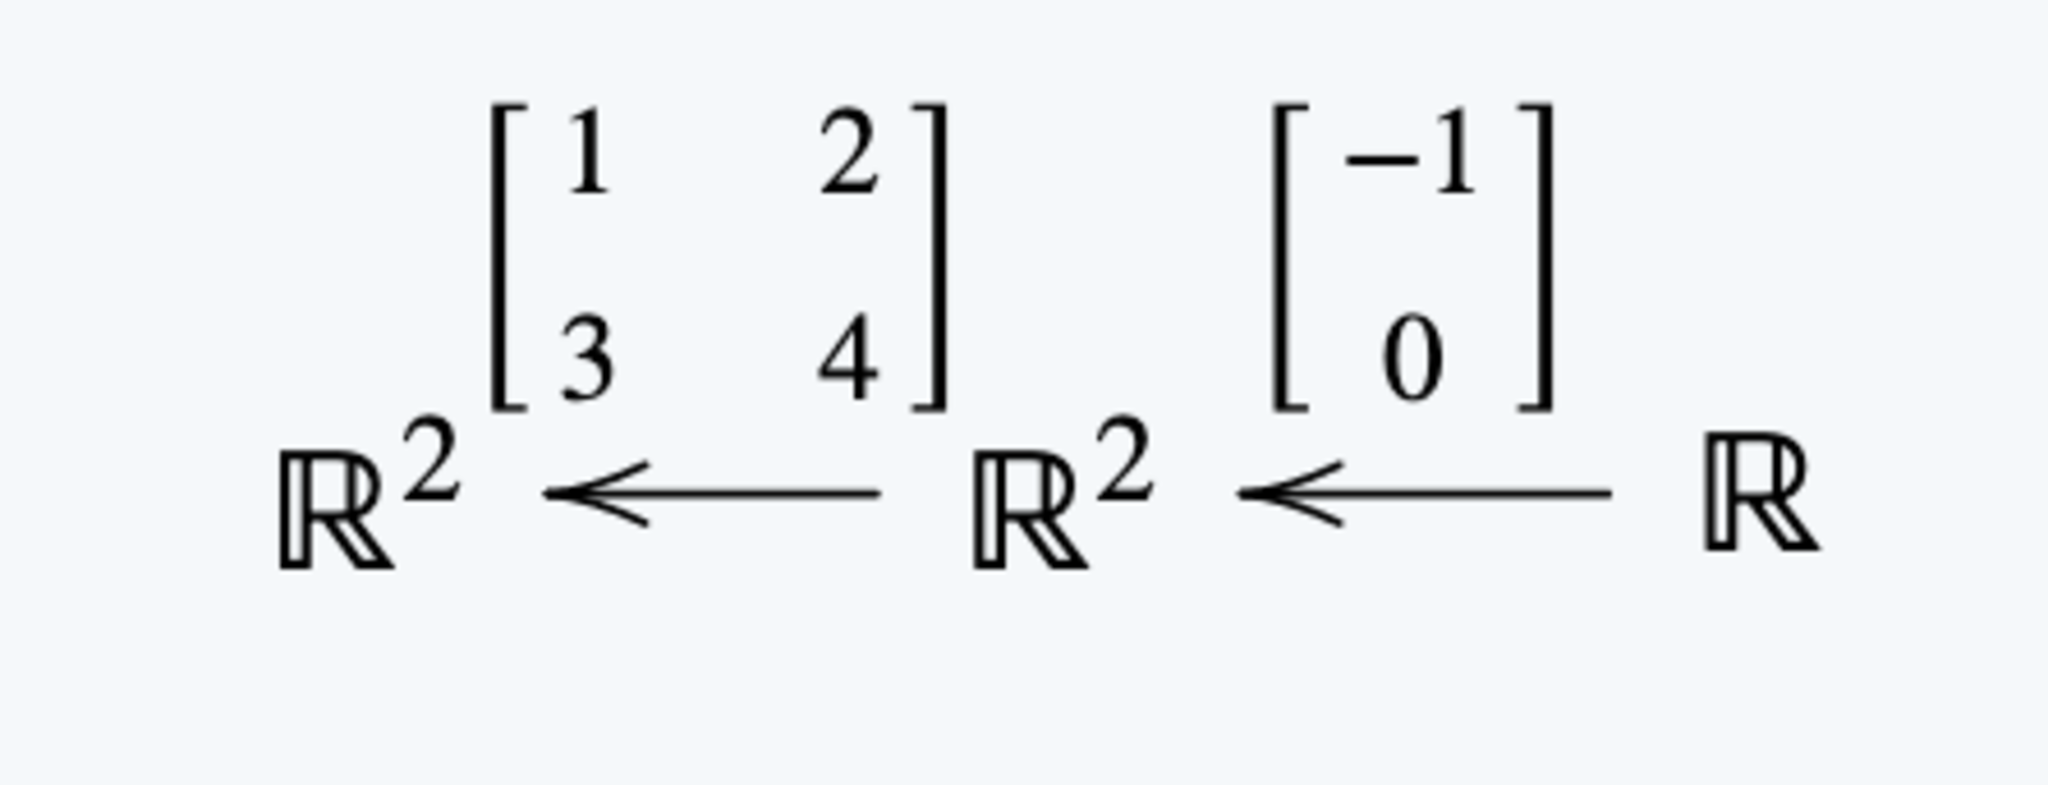 有限次元表現の例